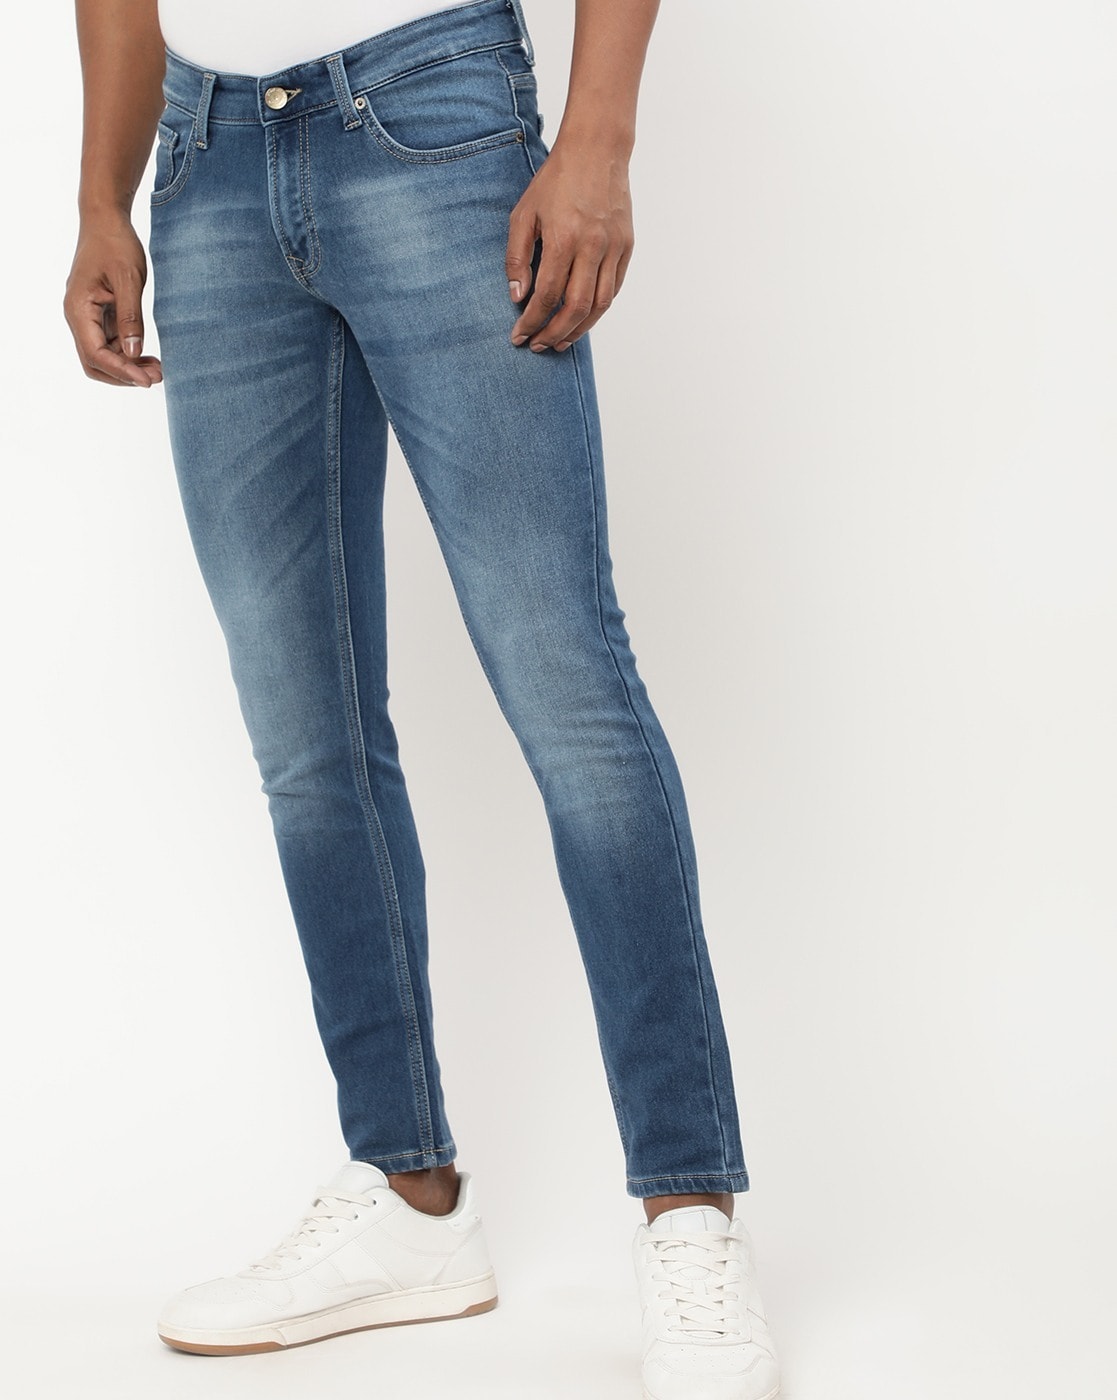 SPYKAR Low Rise Super Skinny Jeans For Men (Blue, 36)